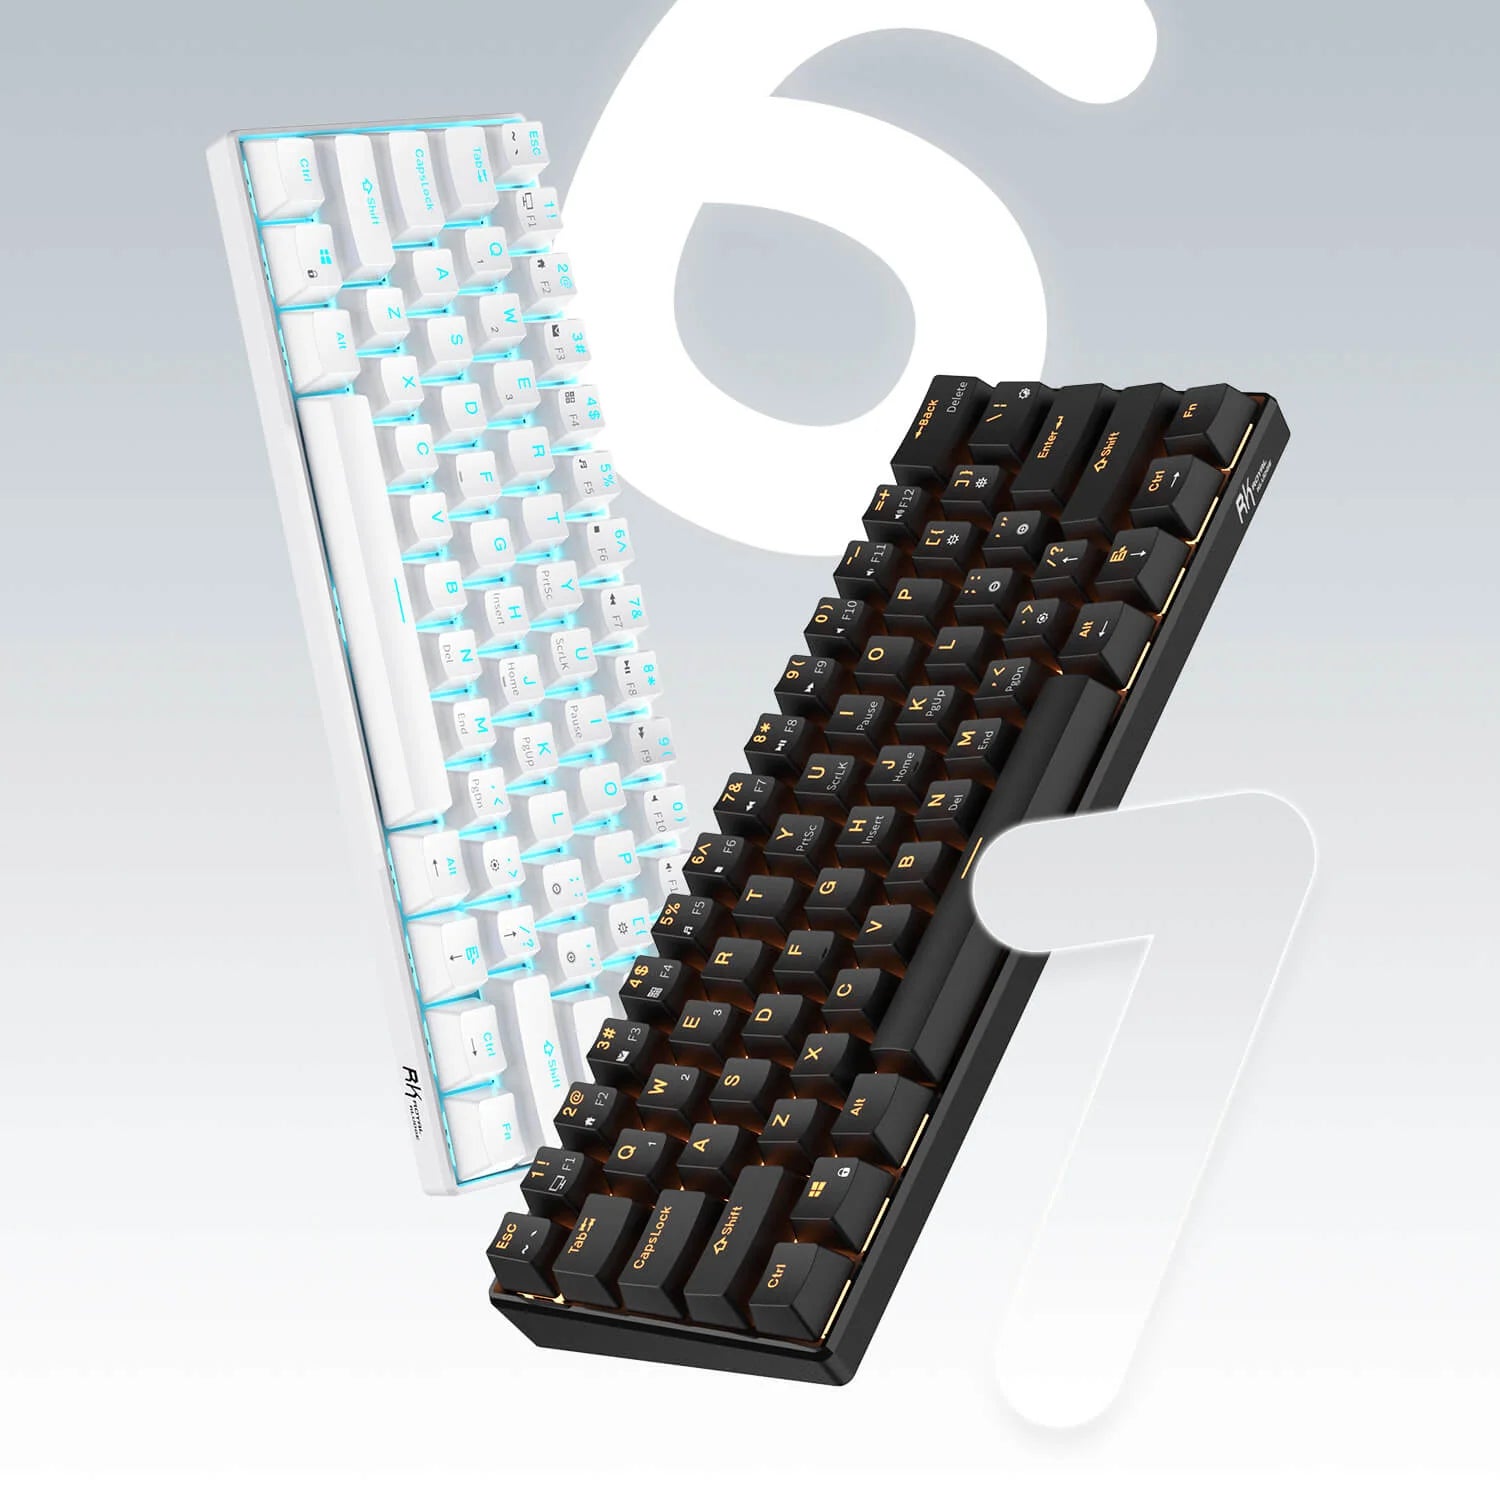 Royal Kludge RK61 60% Mechanical Keyboard